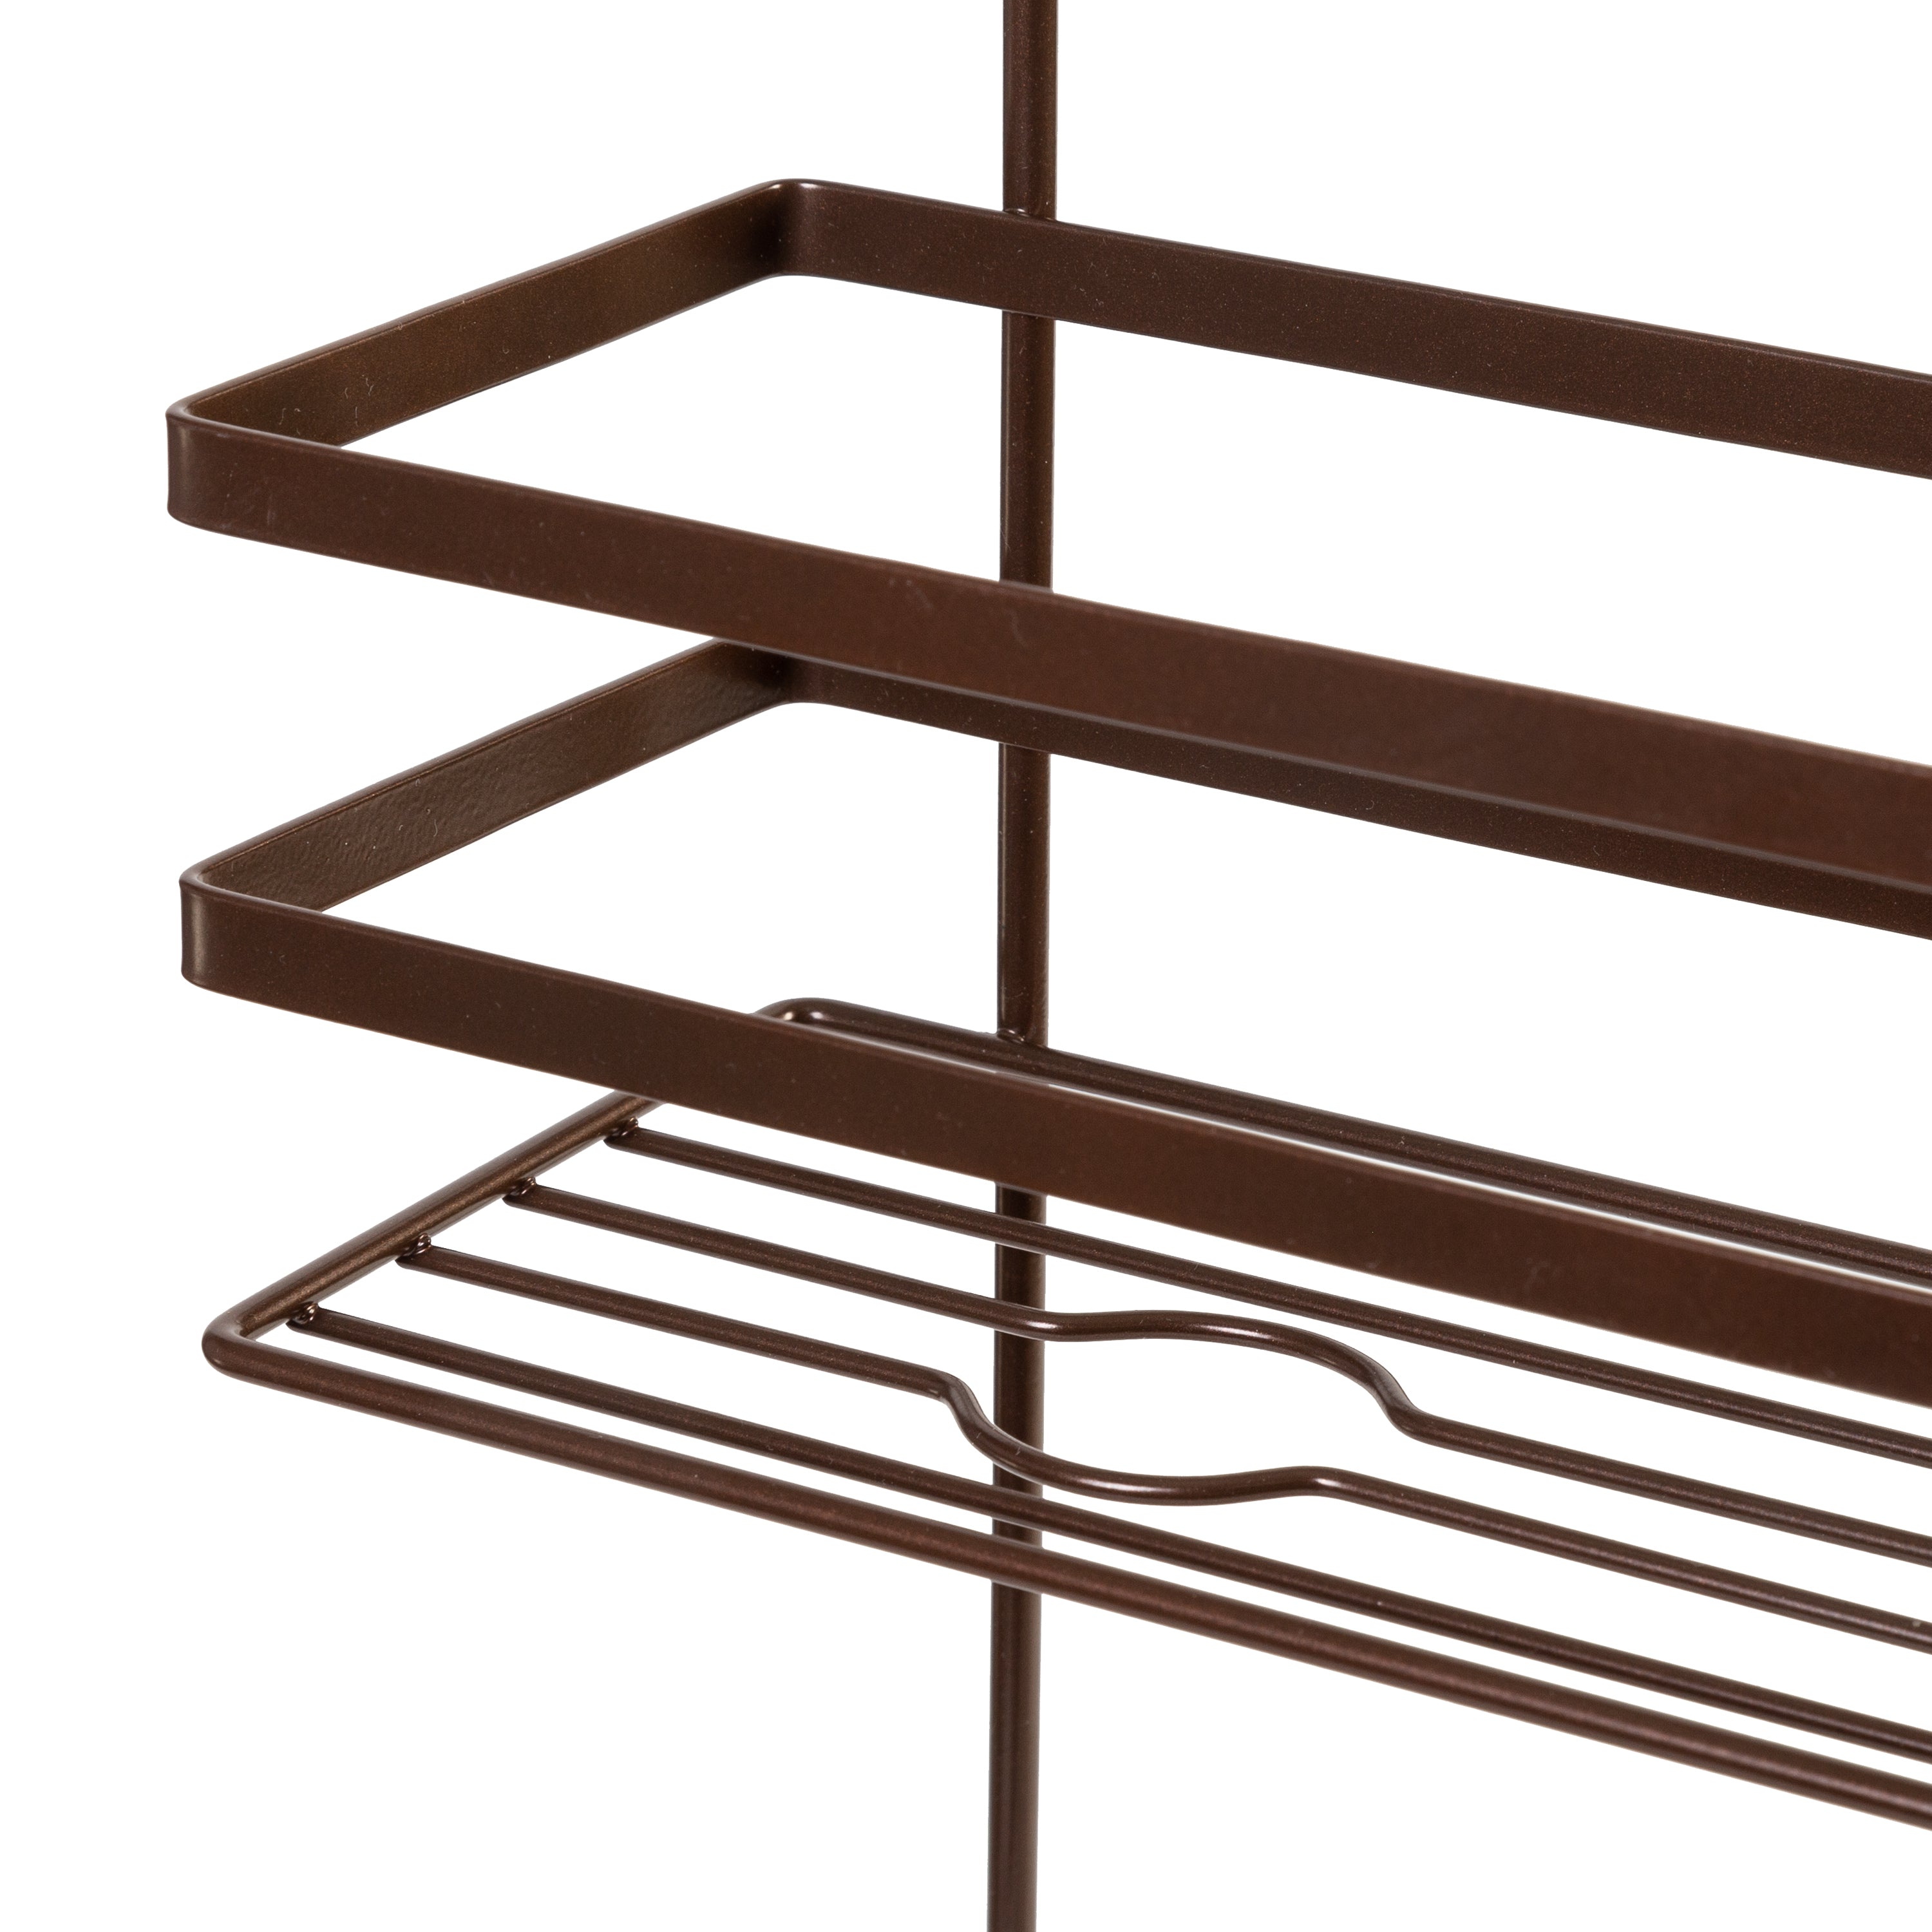 mDesign Steel Shower Caddy Hanging Rack Storage Organizer for Bathroom - Bronze